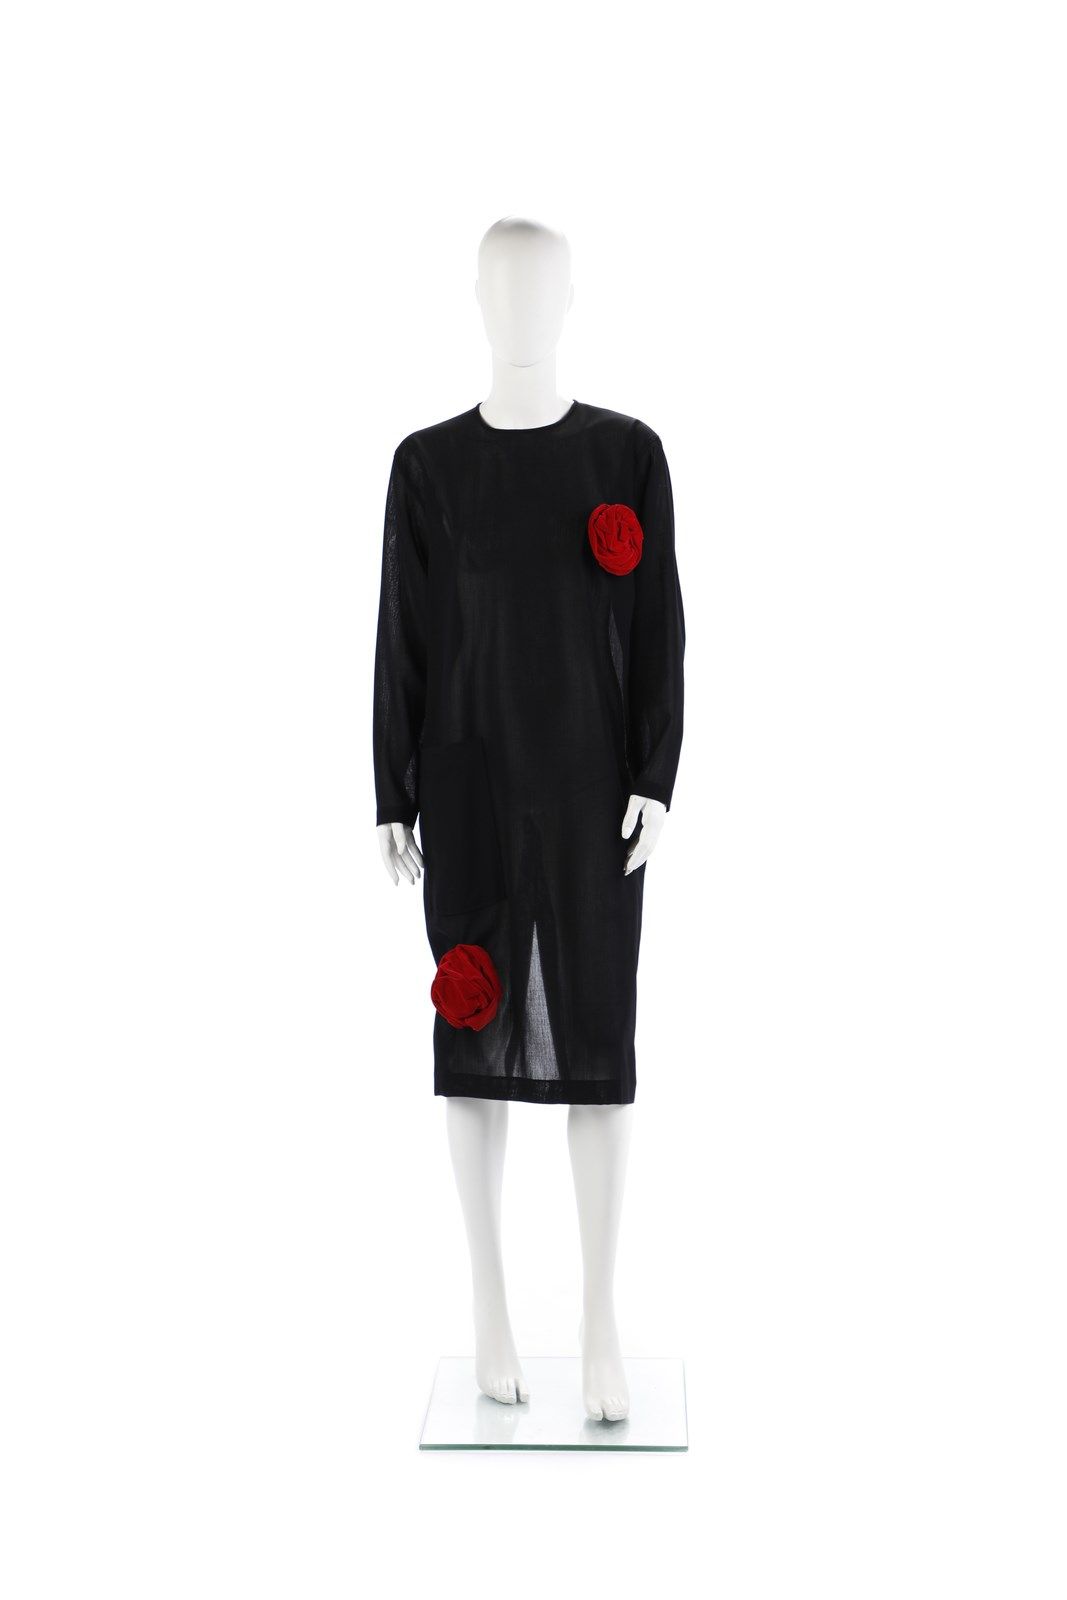 CINZIA RUGGERI Long black dress with red rose appliqué in velvet. Size 42IT. Cer&hellip;